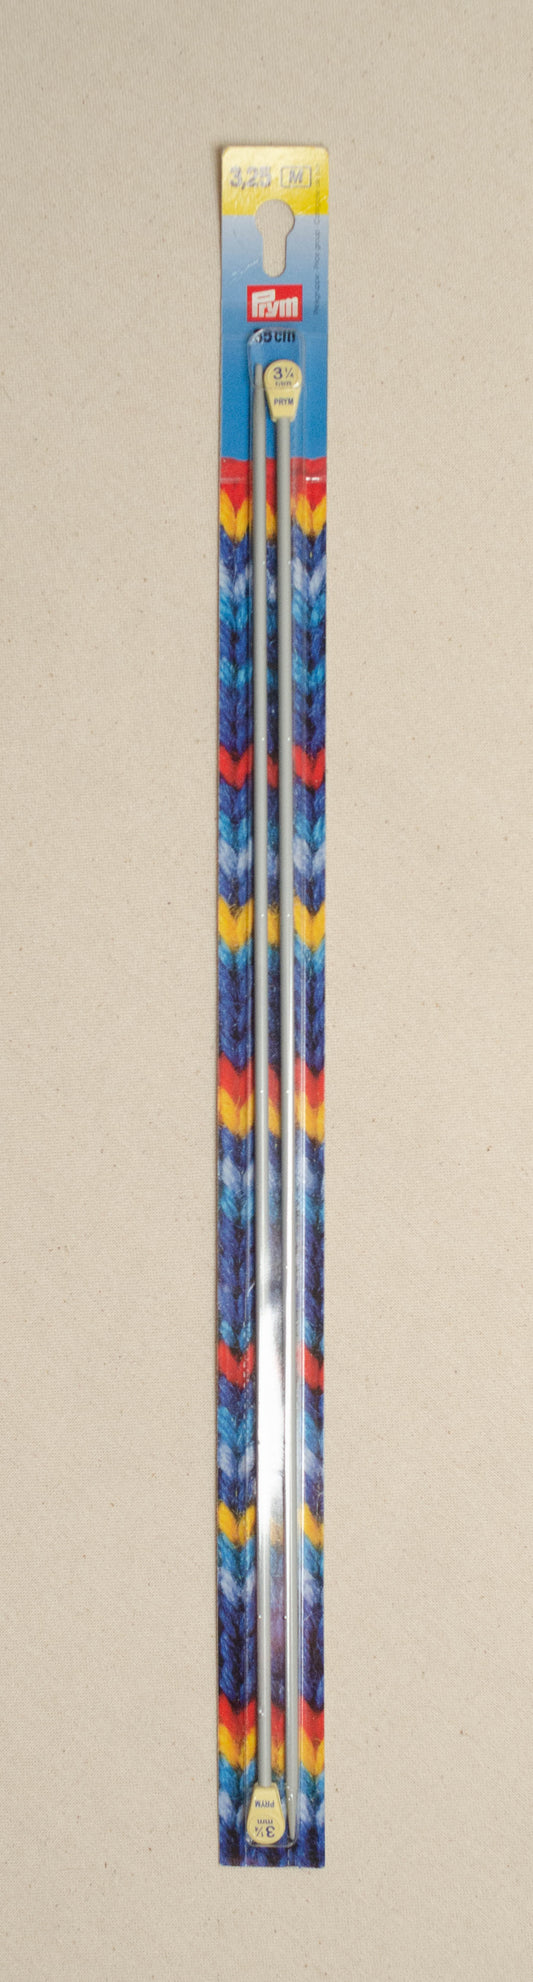 Prym 35cm Knitting Needles - 35cm X 3.25mm